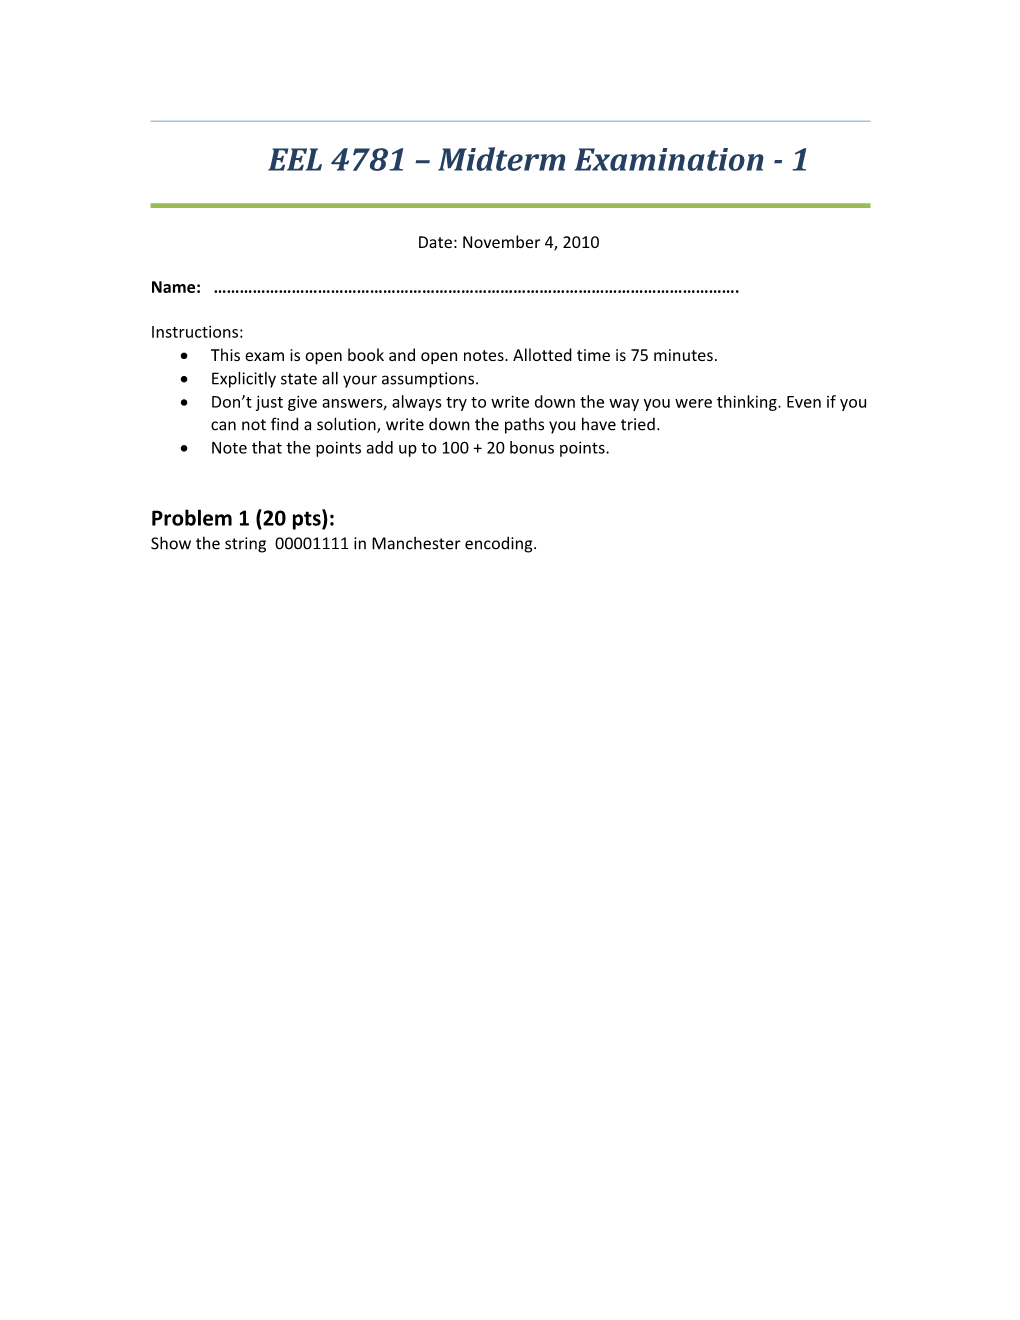 EEL 5708 Midterm Examination